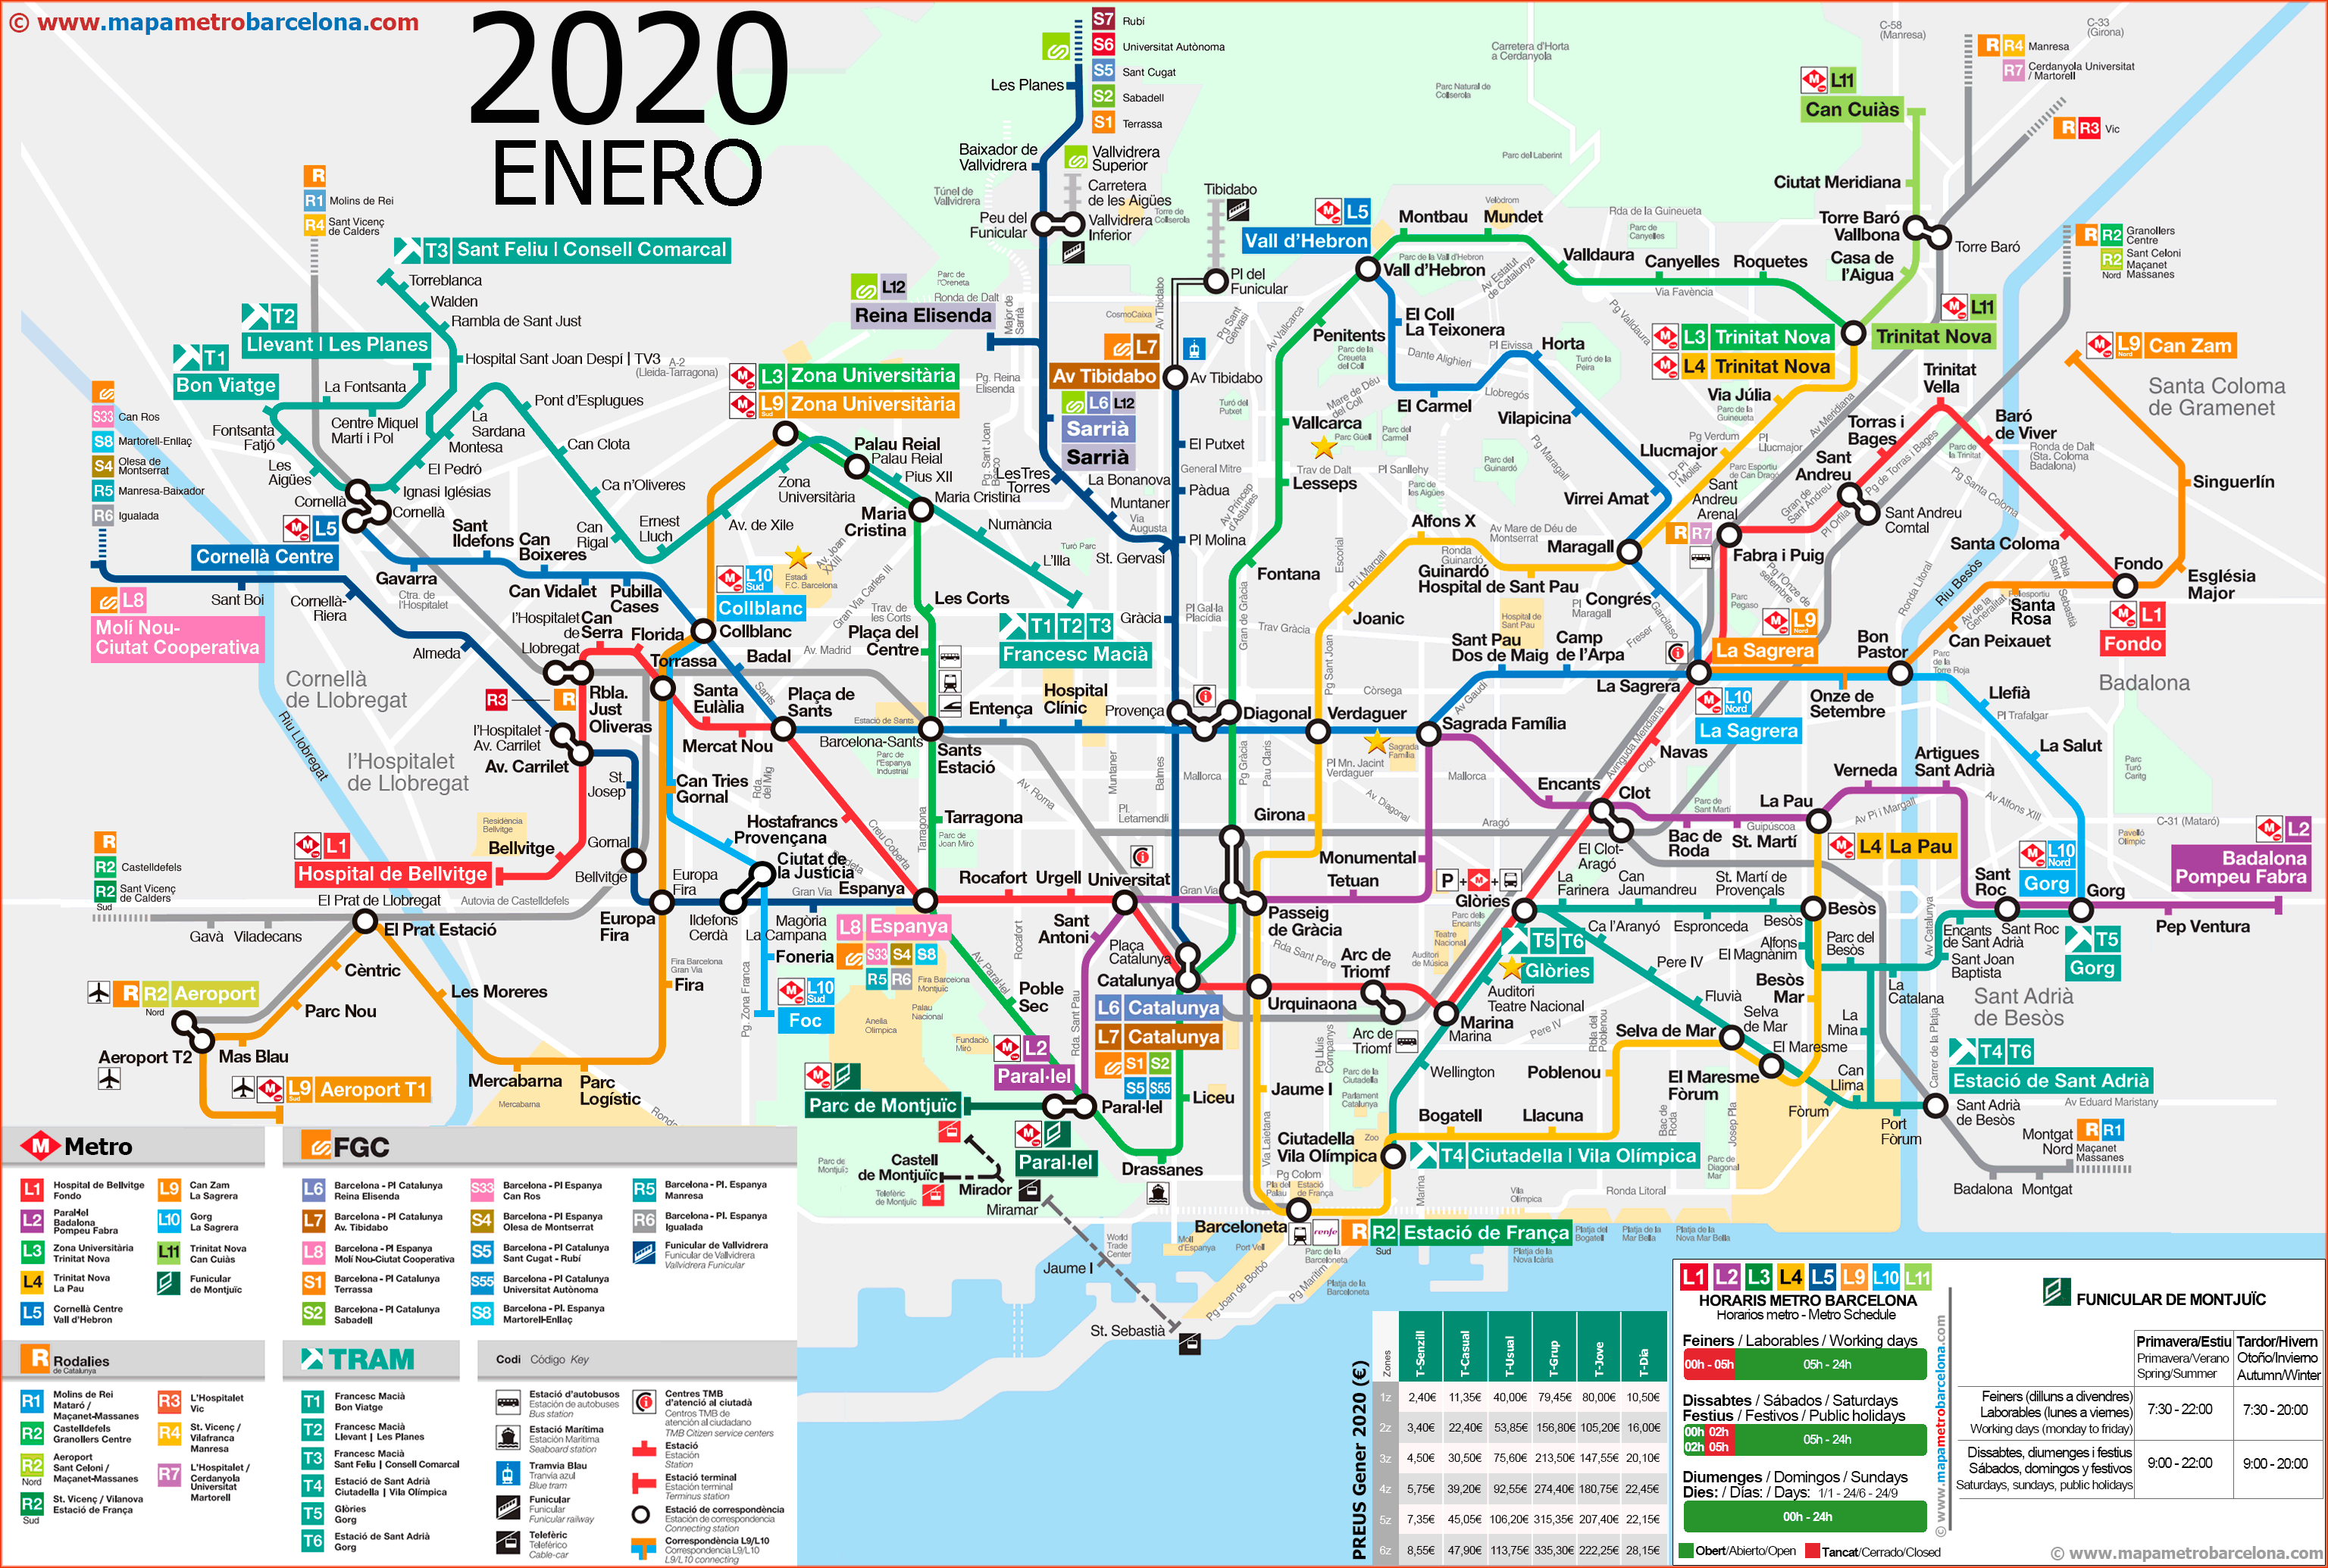 https://www.mapametrobarcelona.com/mapas-metro/mapa-metro-barcelona-2019.png